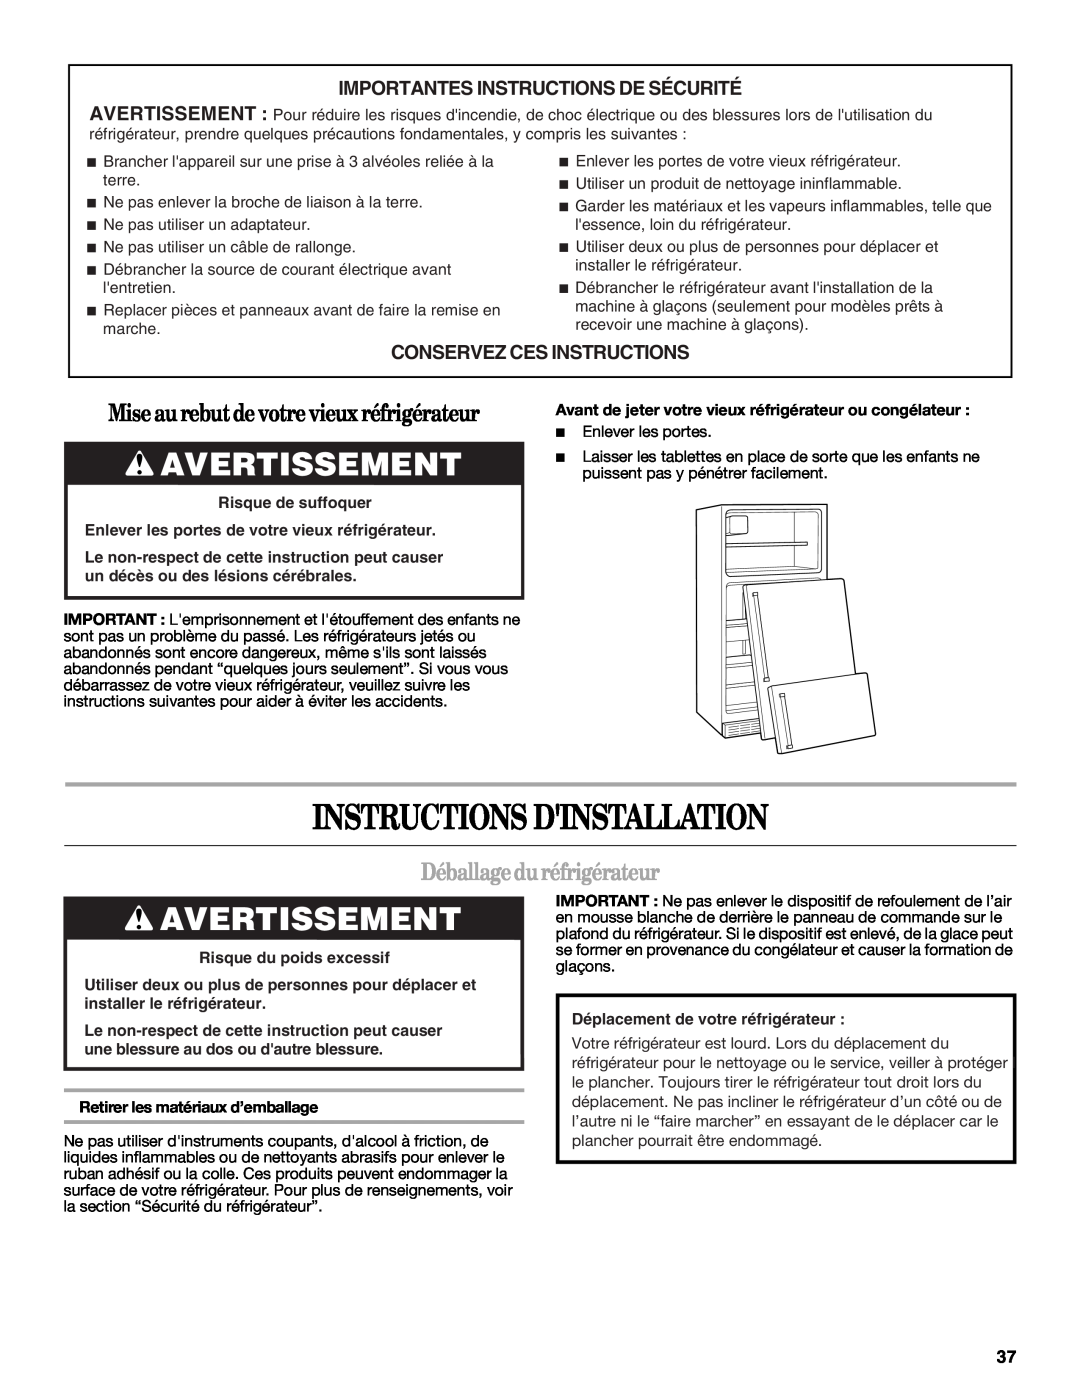 Whirlpool GR2SHWXPB02 warranty Instructions Dinstallation, Avertissement, Miseau rebutdevotrevieuxréfrigérateur 